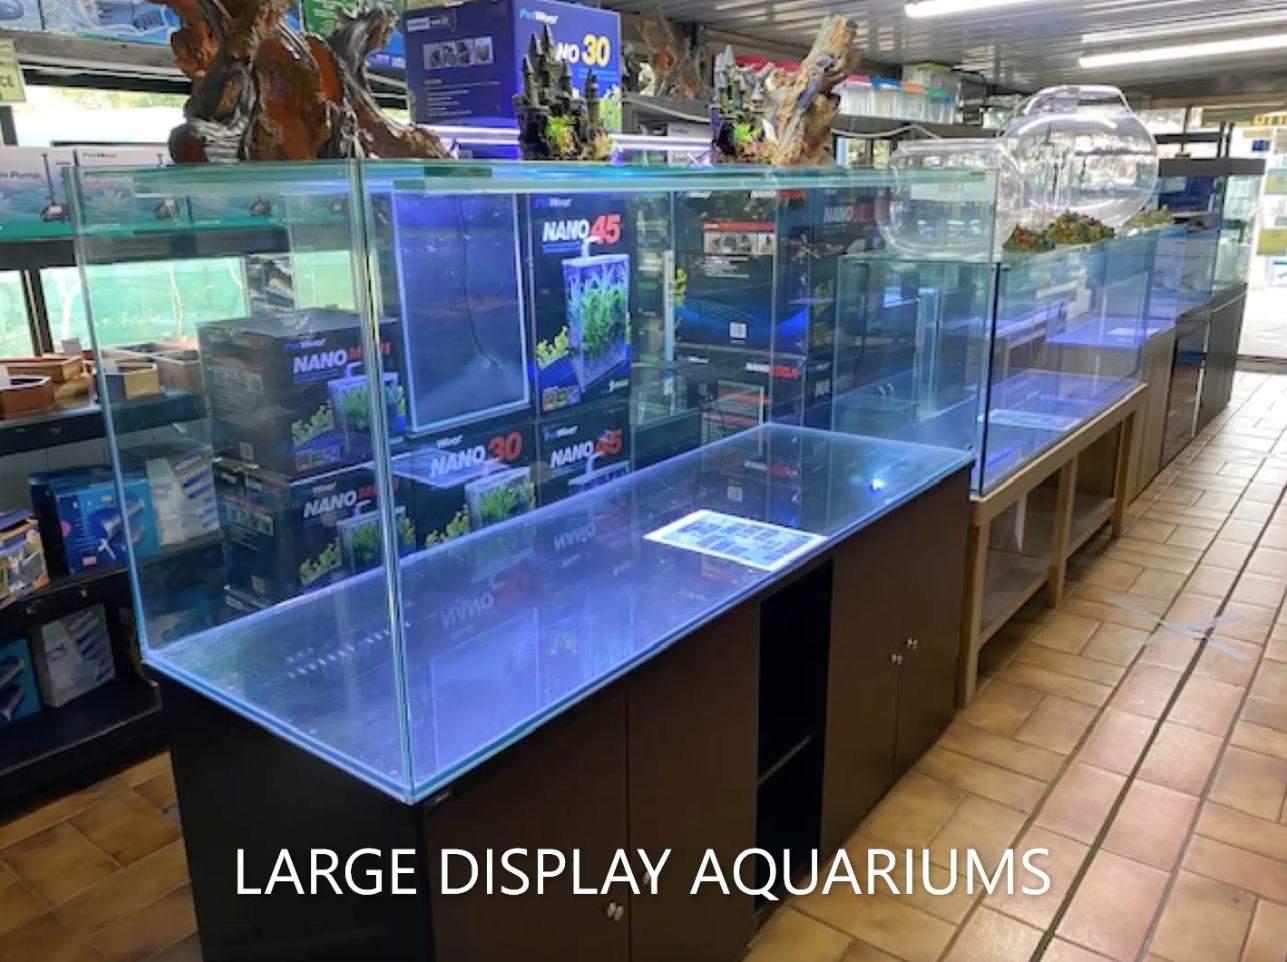 Large Glass Display Aquariums in Pet Store — Summerland Aquarium in Wollongbar, NSW